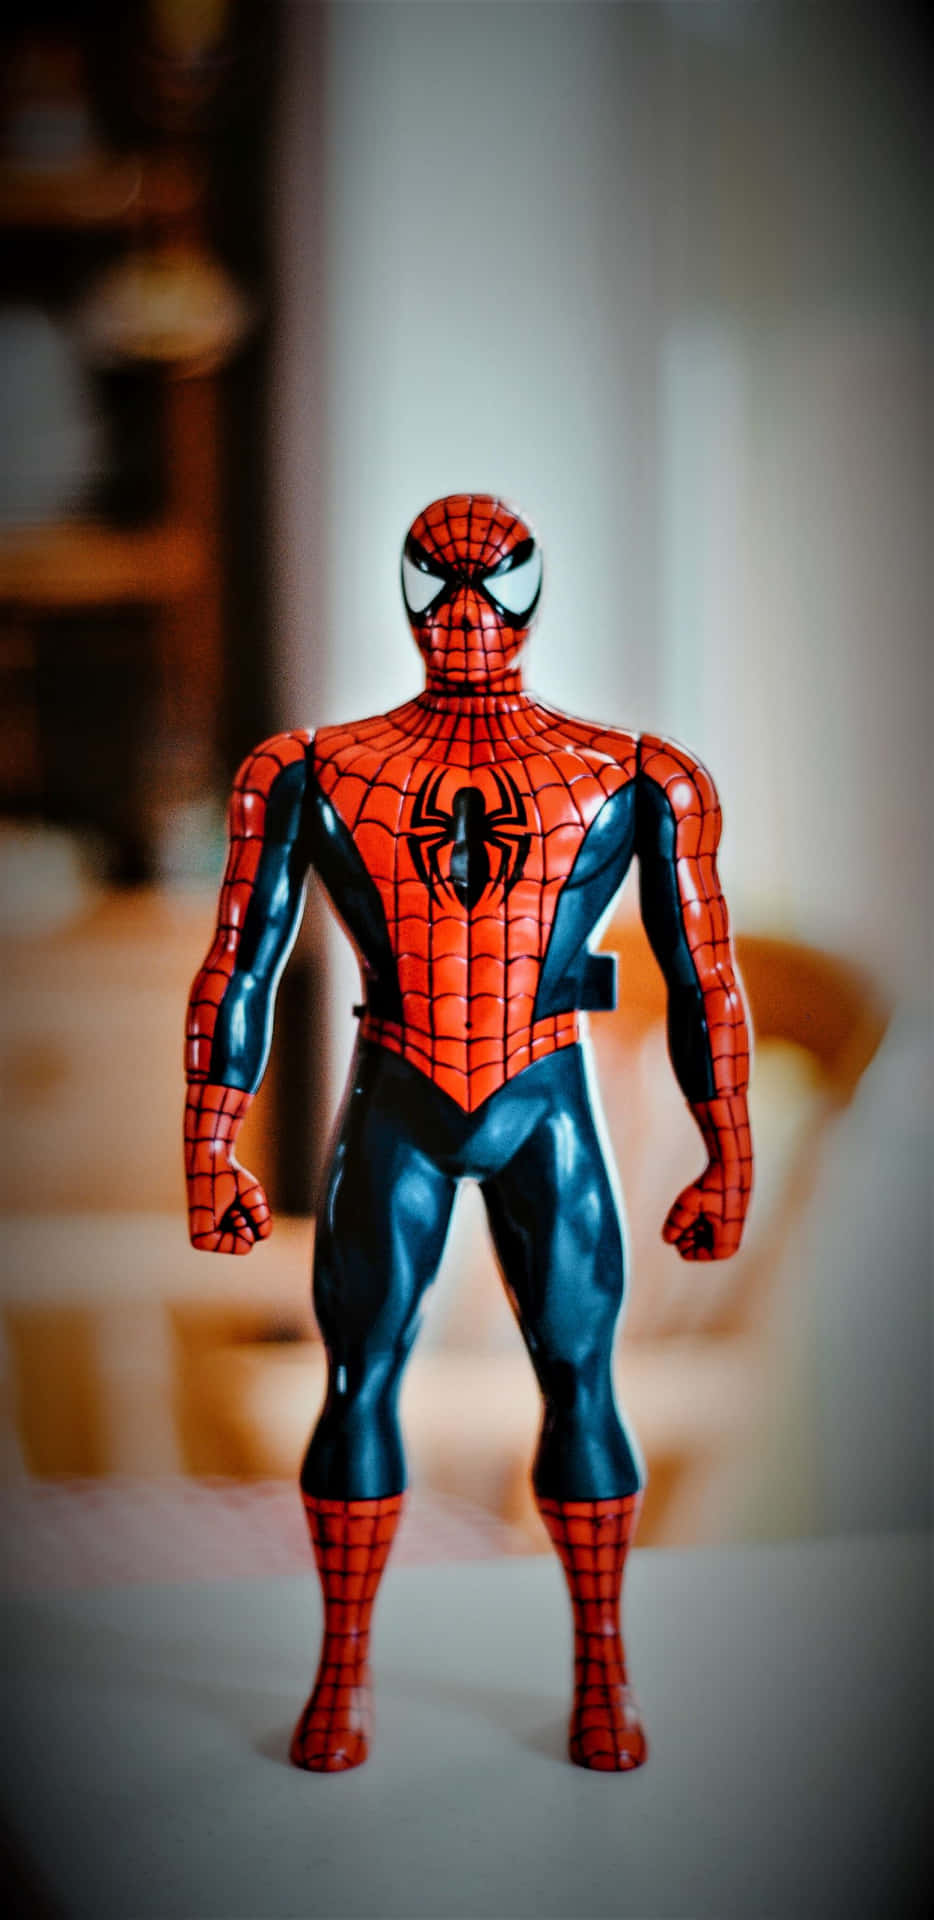 Pixel3xl Marvel Bakgrund Spiderman-leksak På Ett Bord.